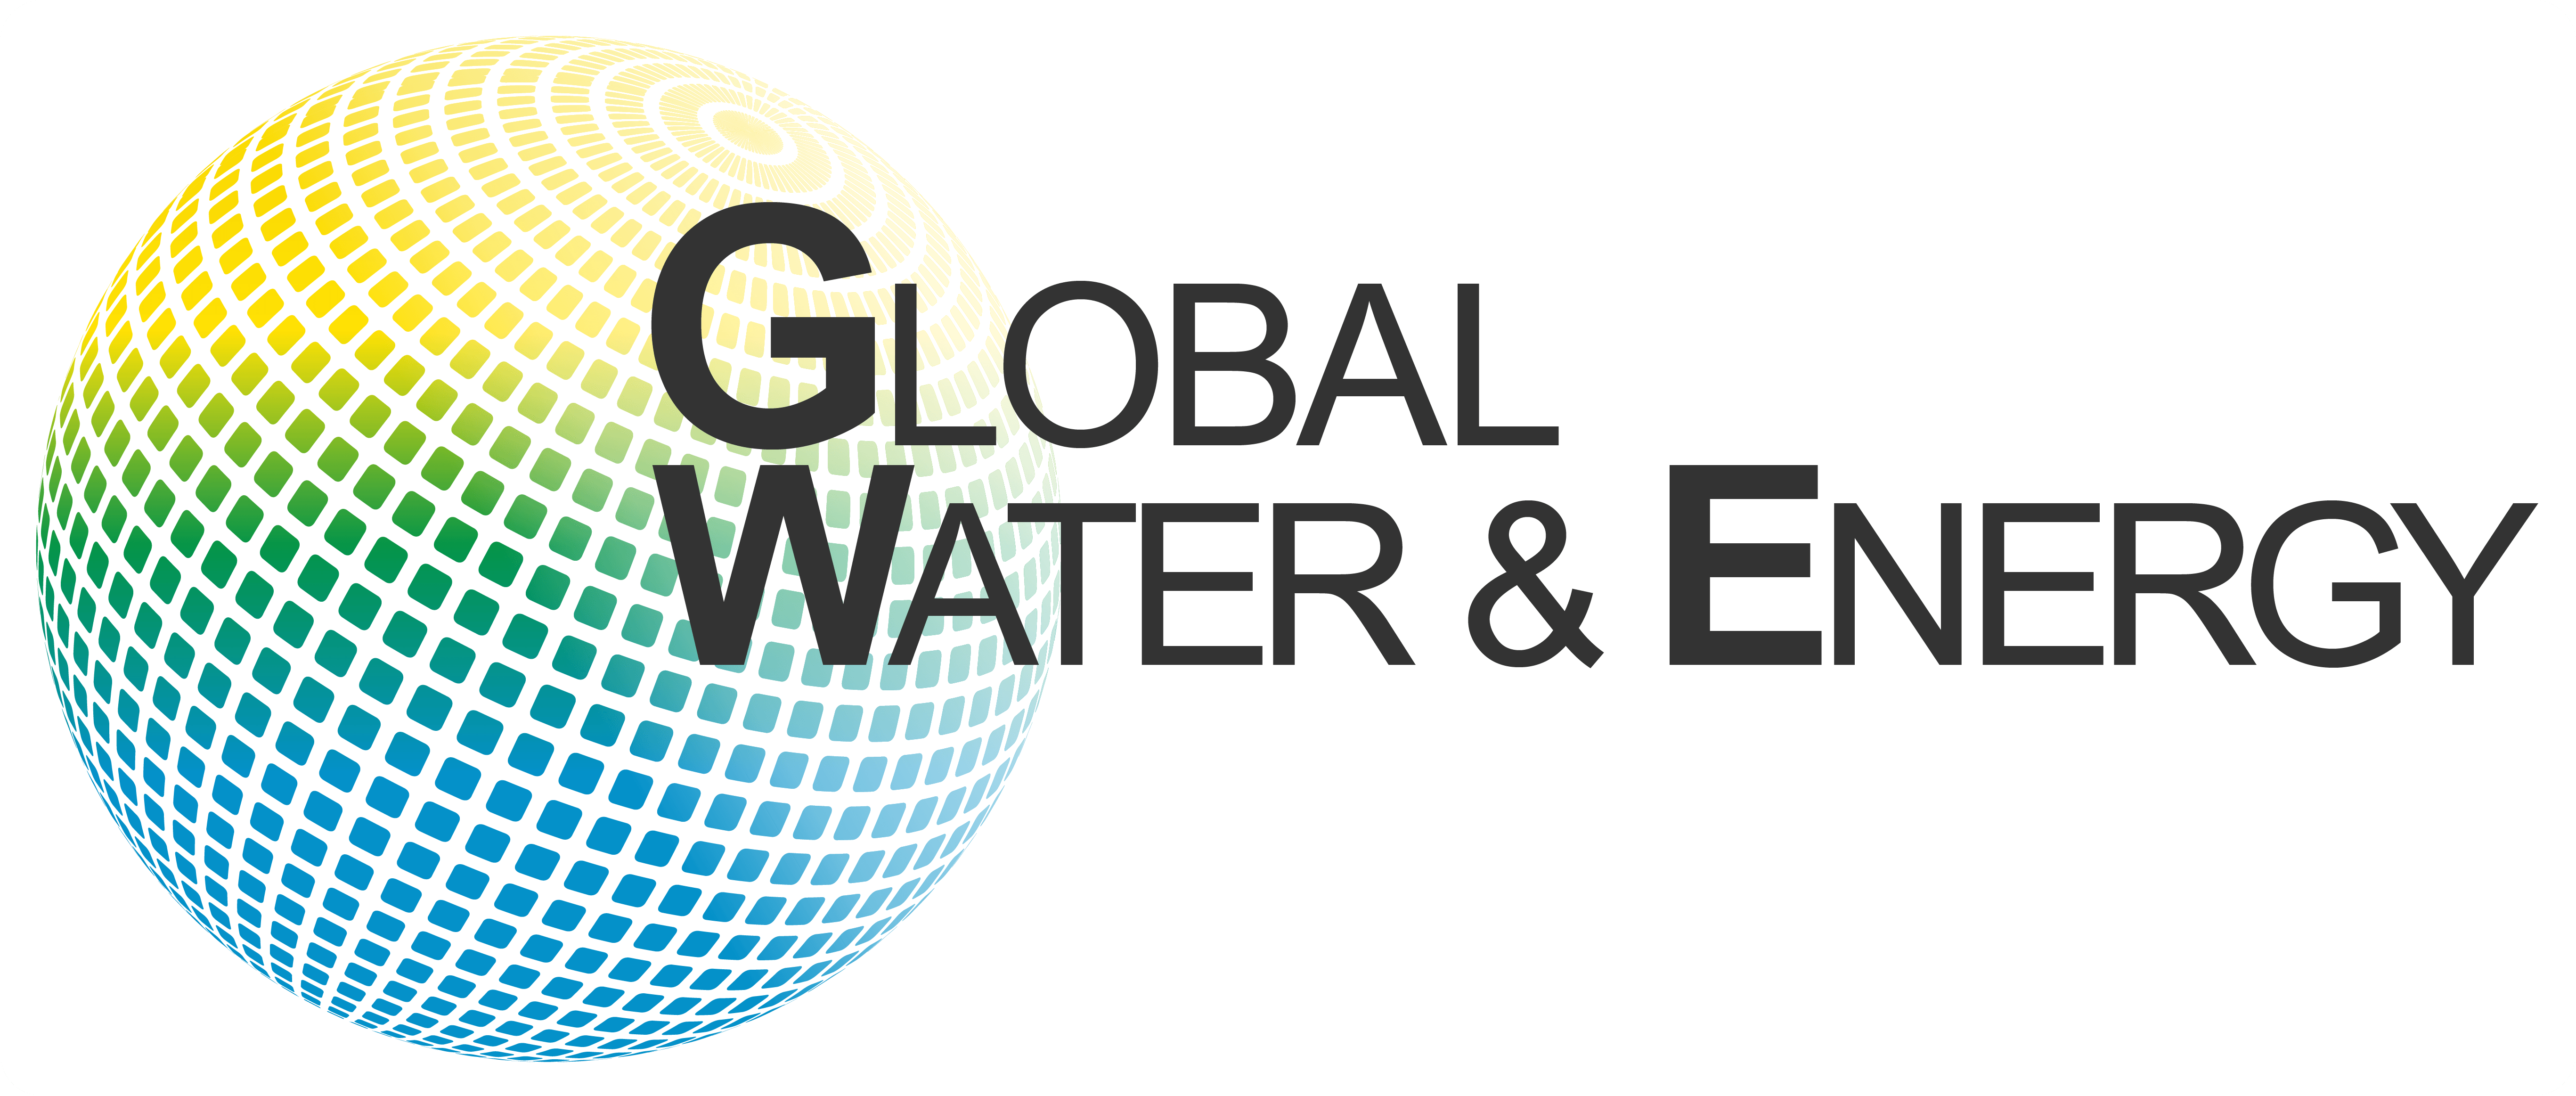 Water Maintenance Company Logo - Global Water & Energy | A member of Global Water Engineering Group ...